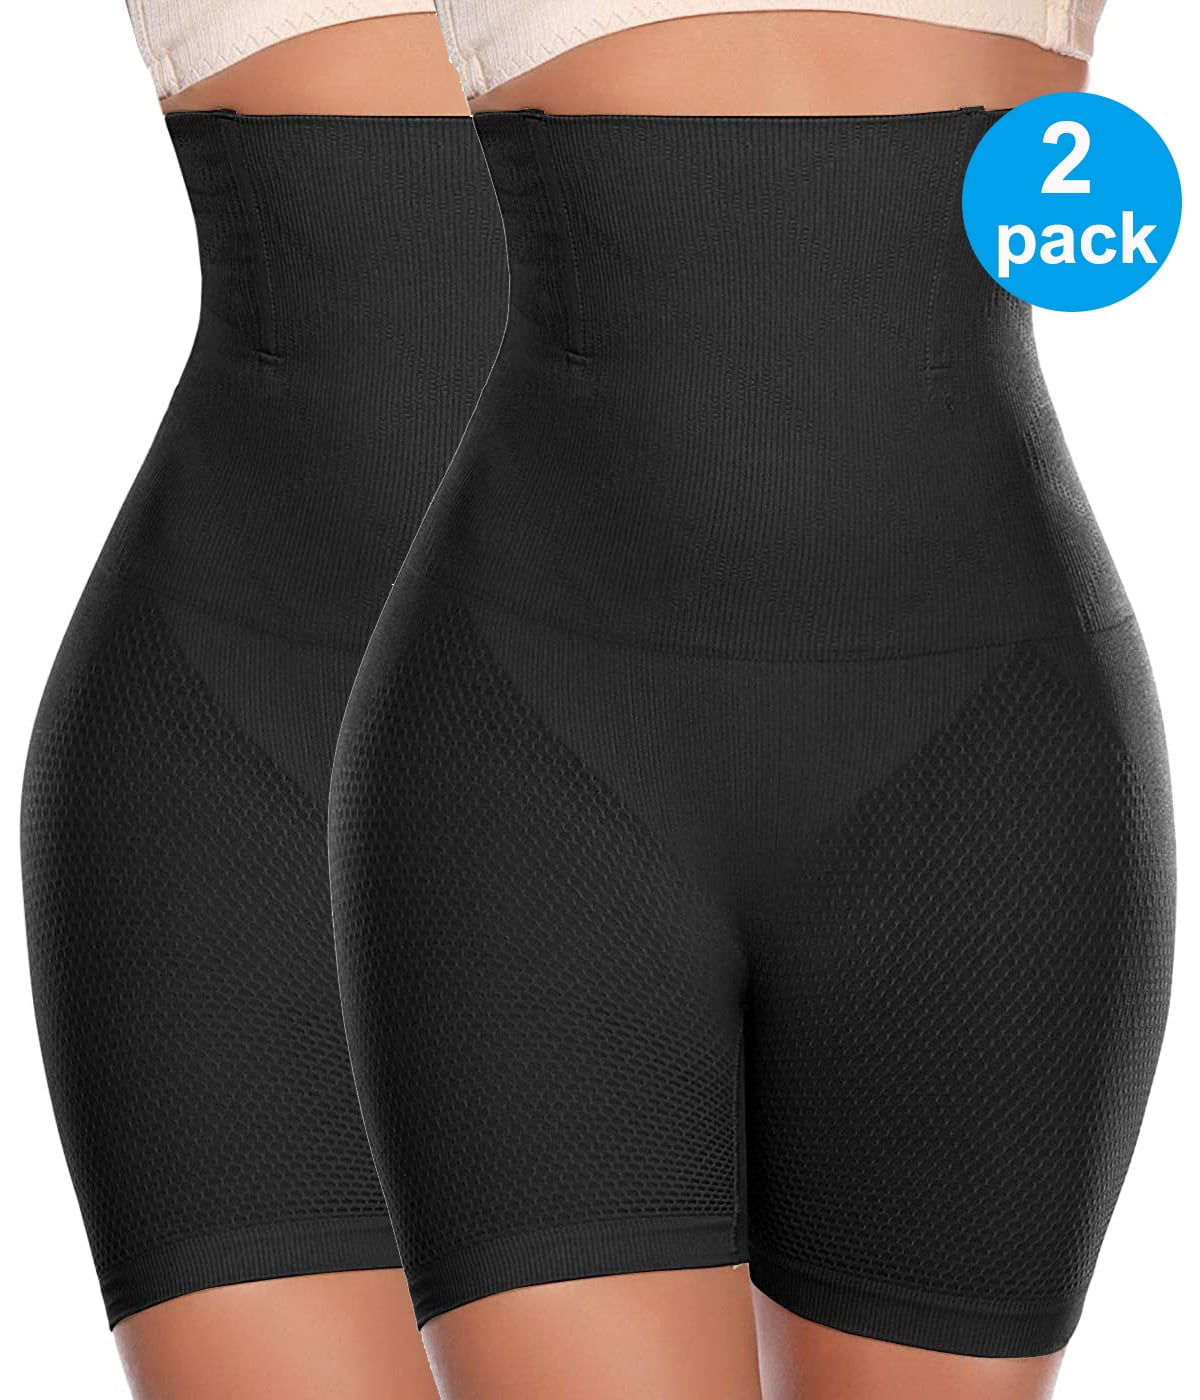 2 pack Women Waist Trainer Shapewear Tummy Control Body Shaper Shorts Hi-Waist Butt Lifter Thigh Slimmer image